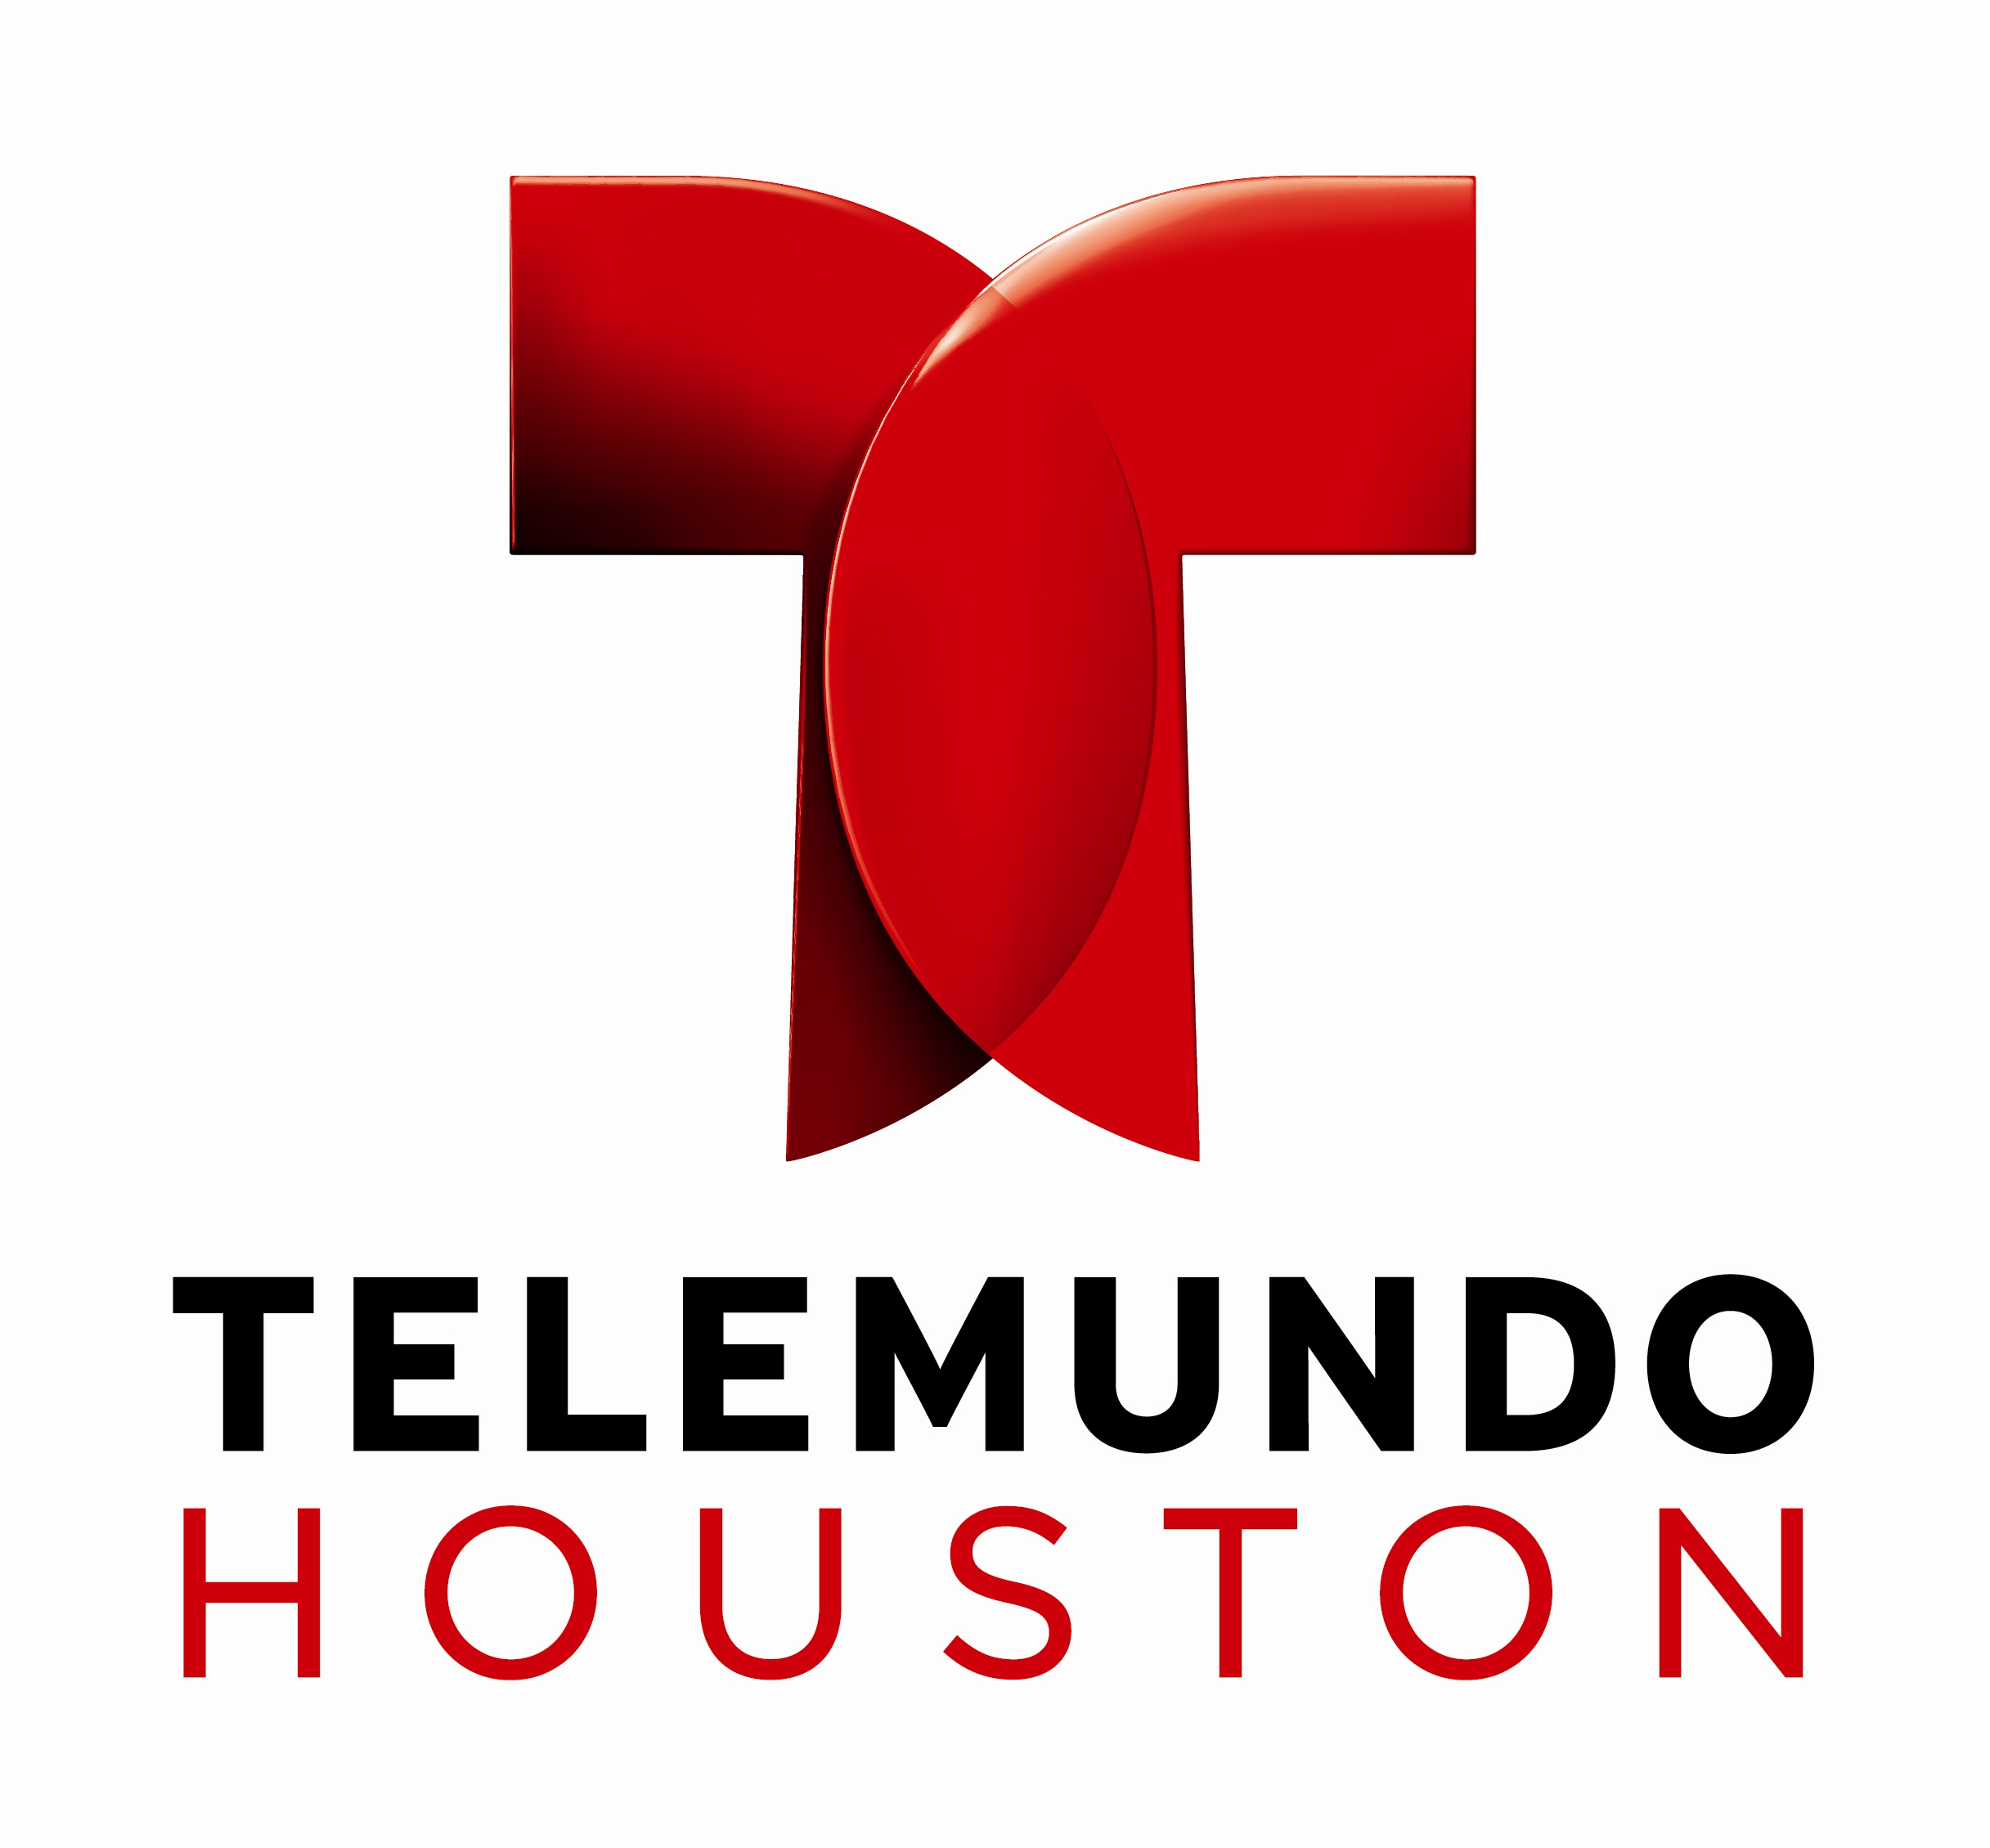 NEW Telemundo Houston Logo – USE THIS